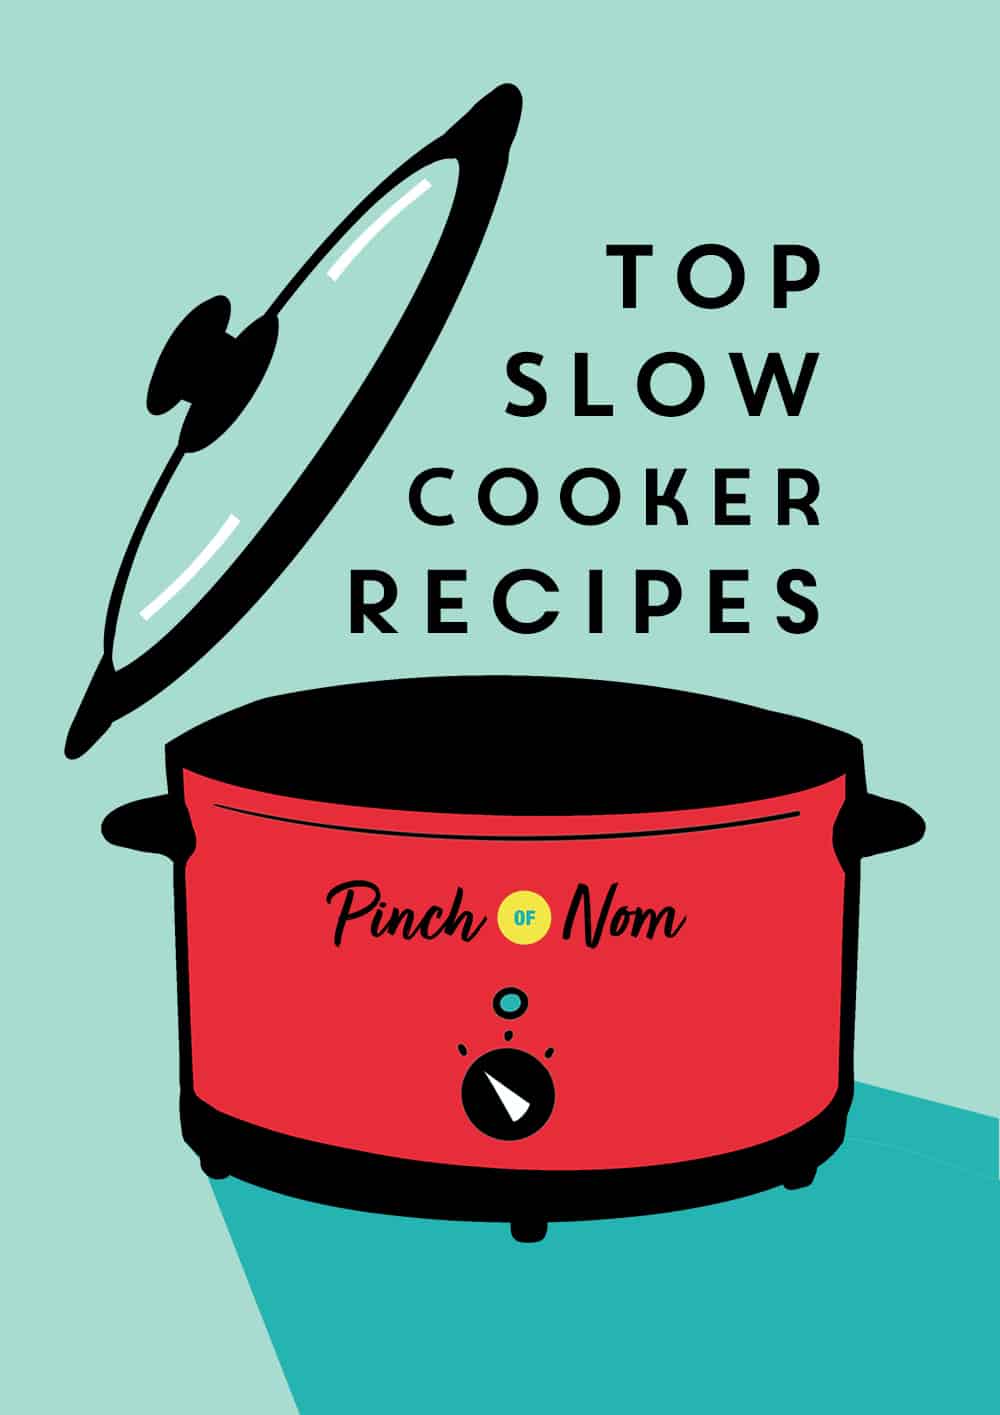 Top Slow Cooker Recipes pinchofnom.com